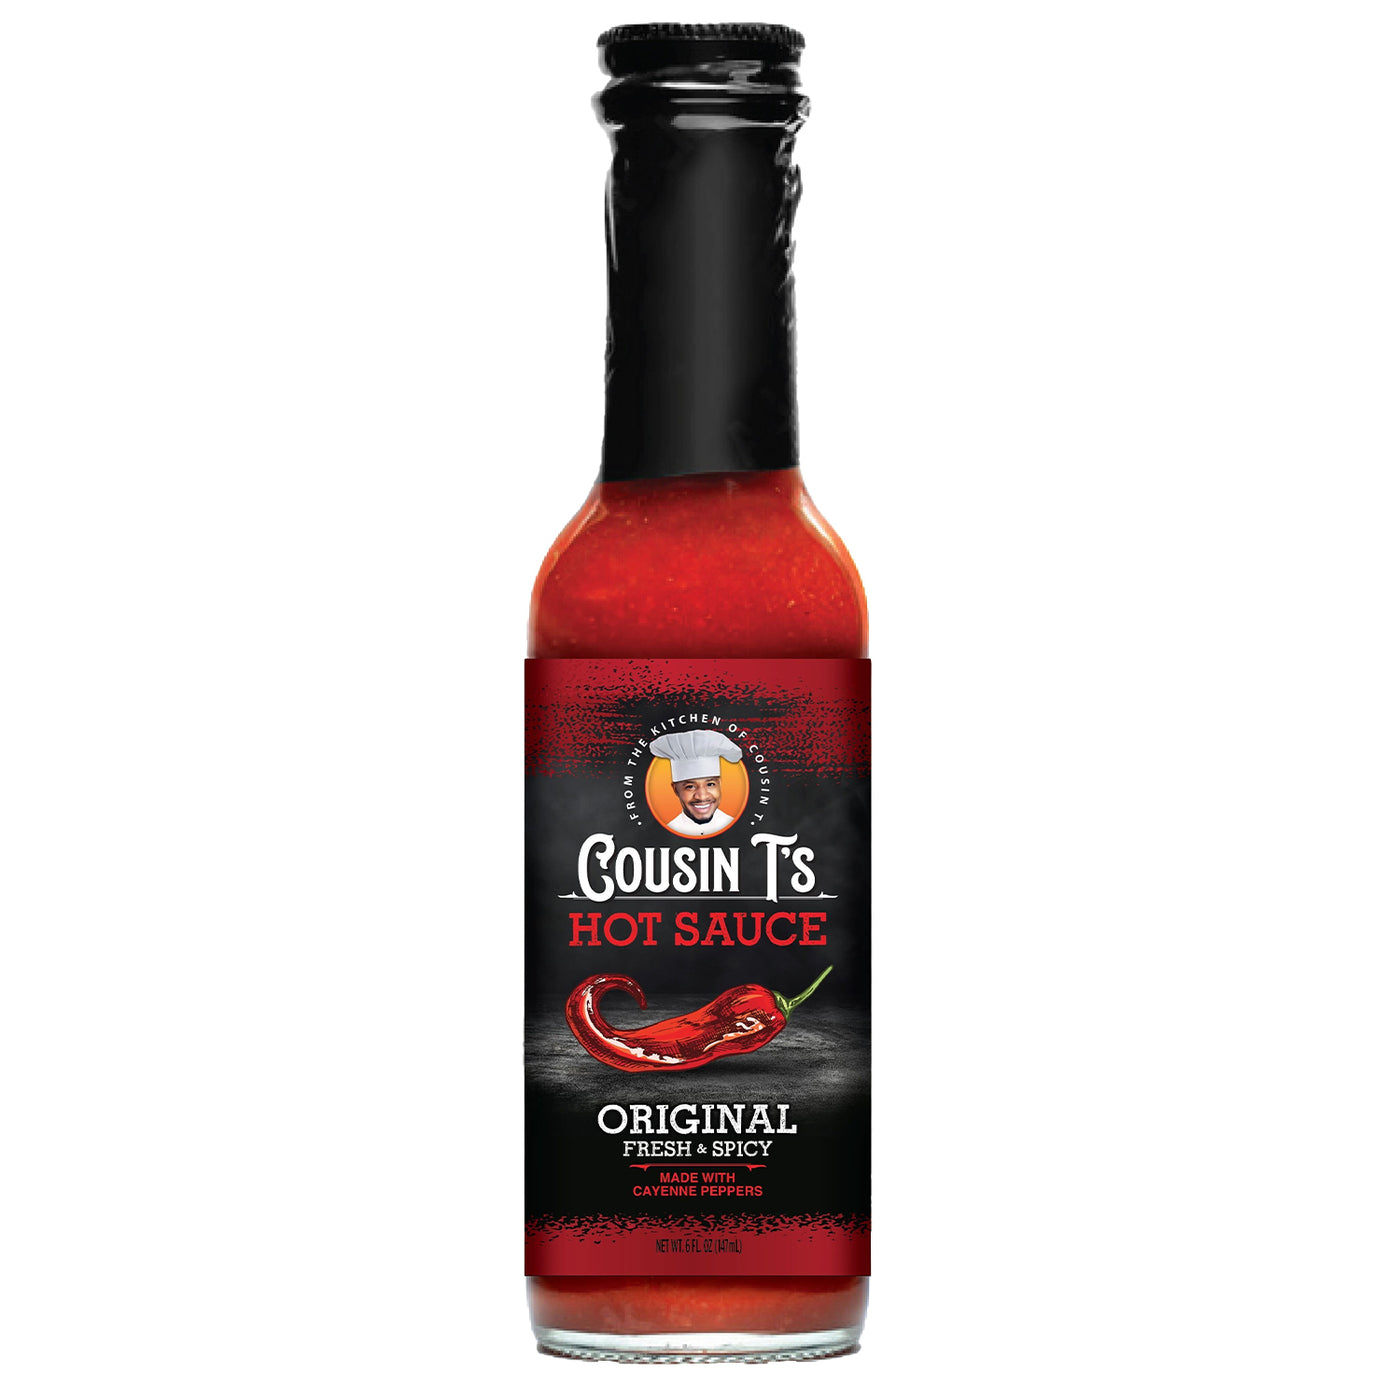 Cousin T's Original Hot Sauce